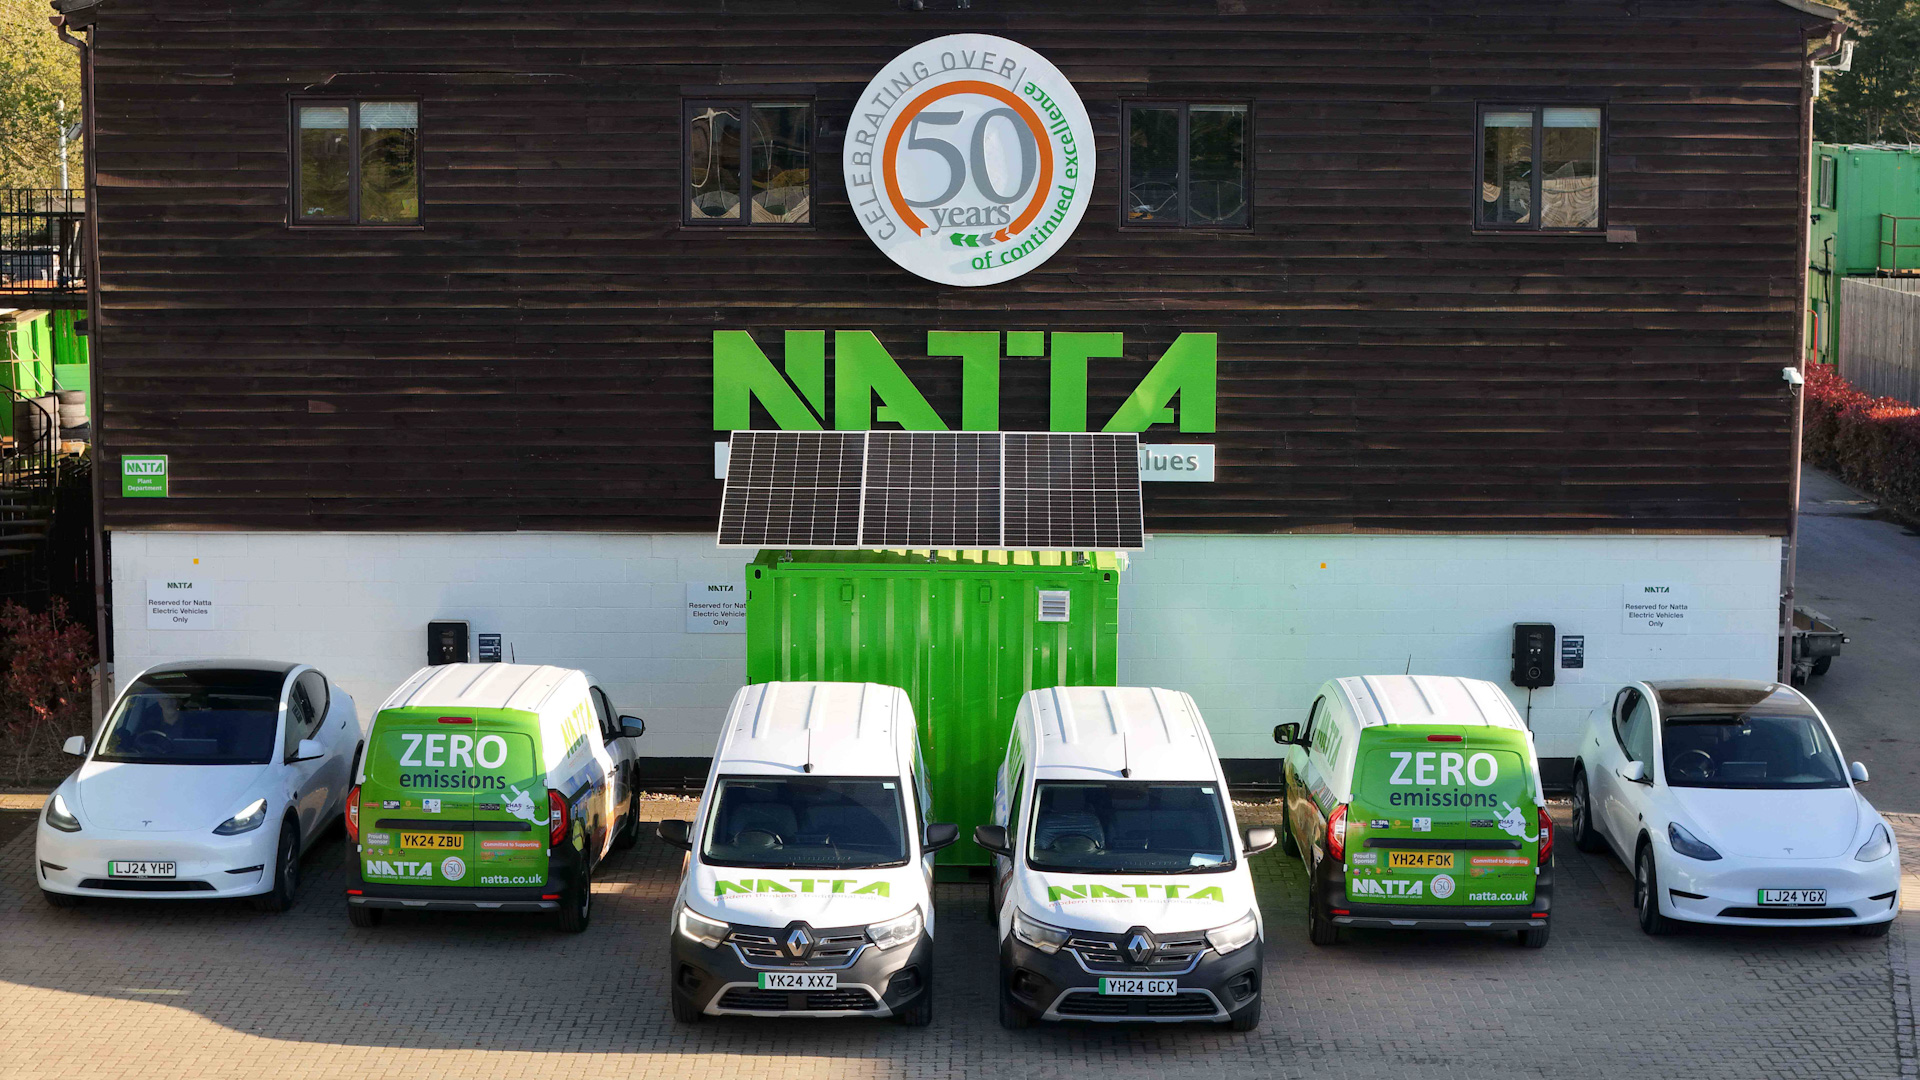 Natta electric vehicles